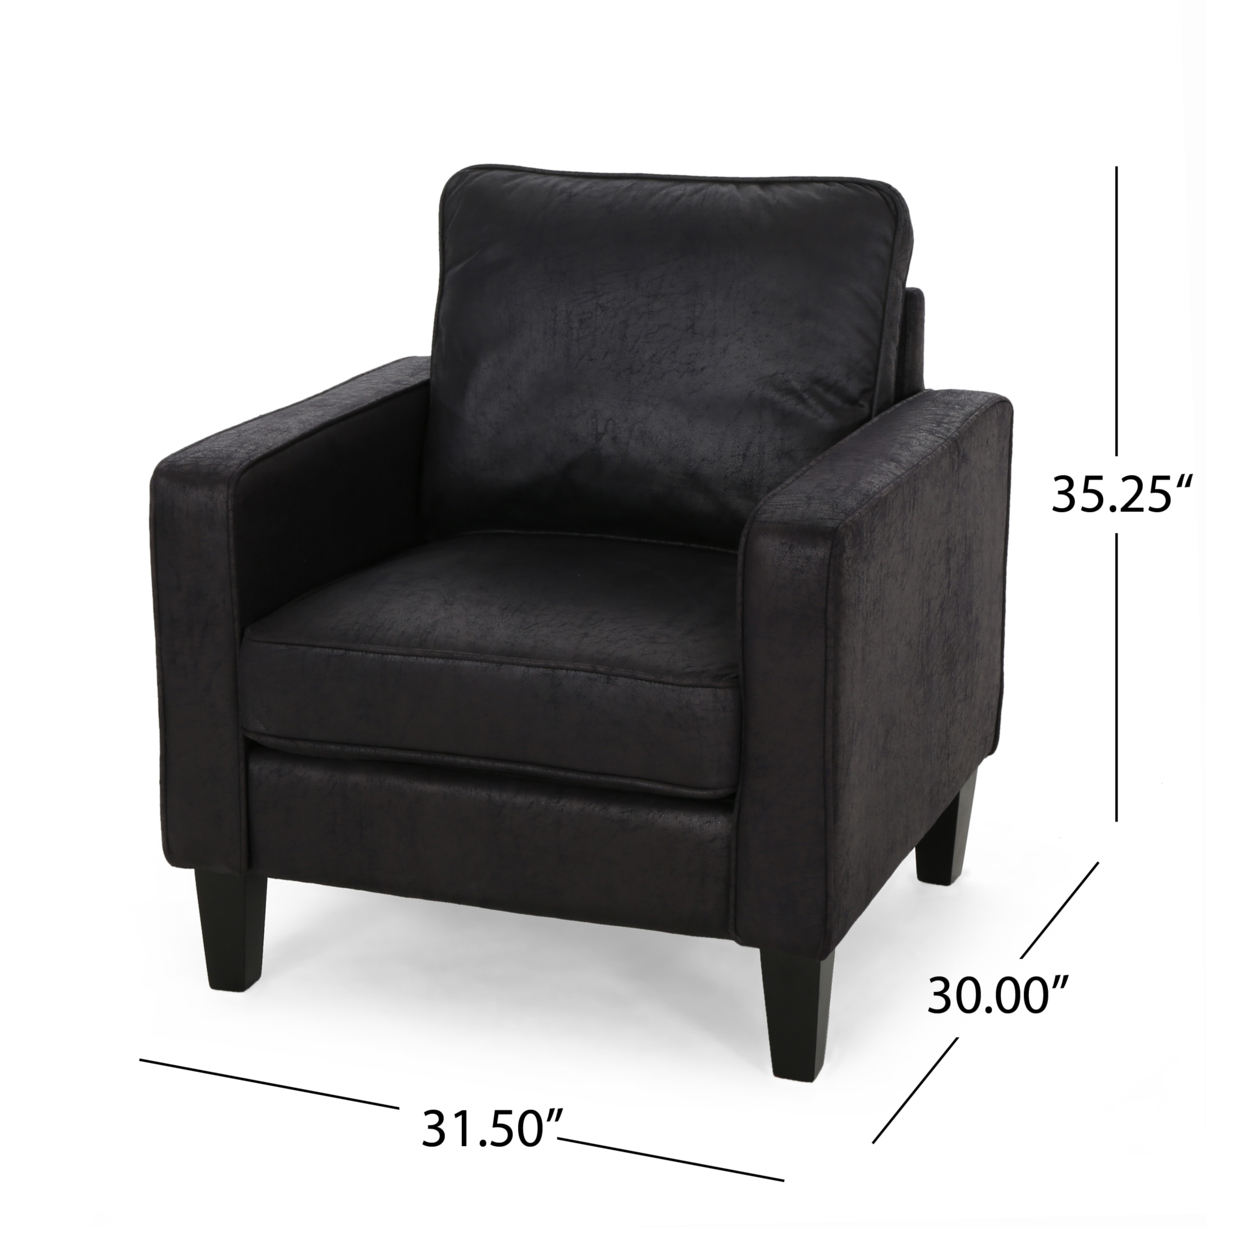 Hedy Contemporary Microfiber Club Chair - Black + Dark Brown